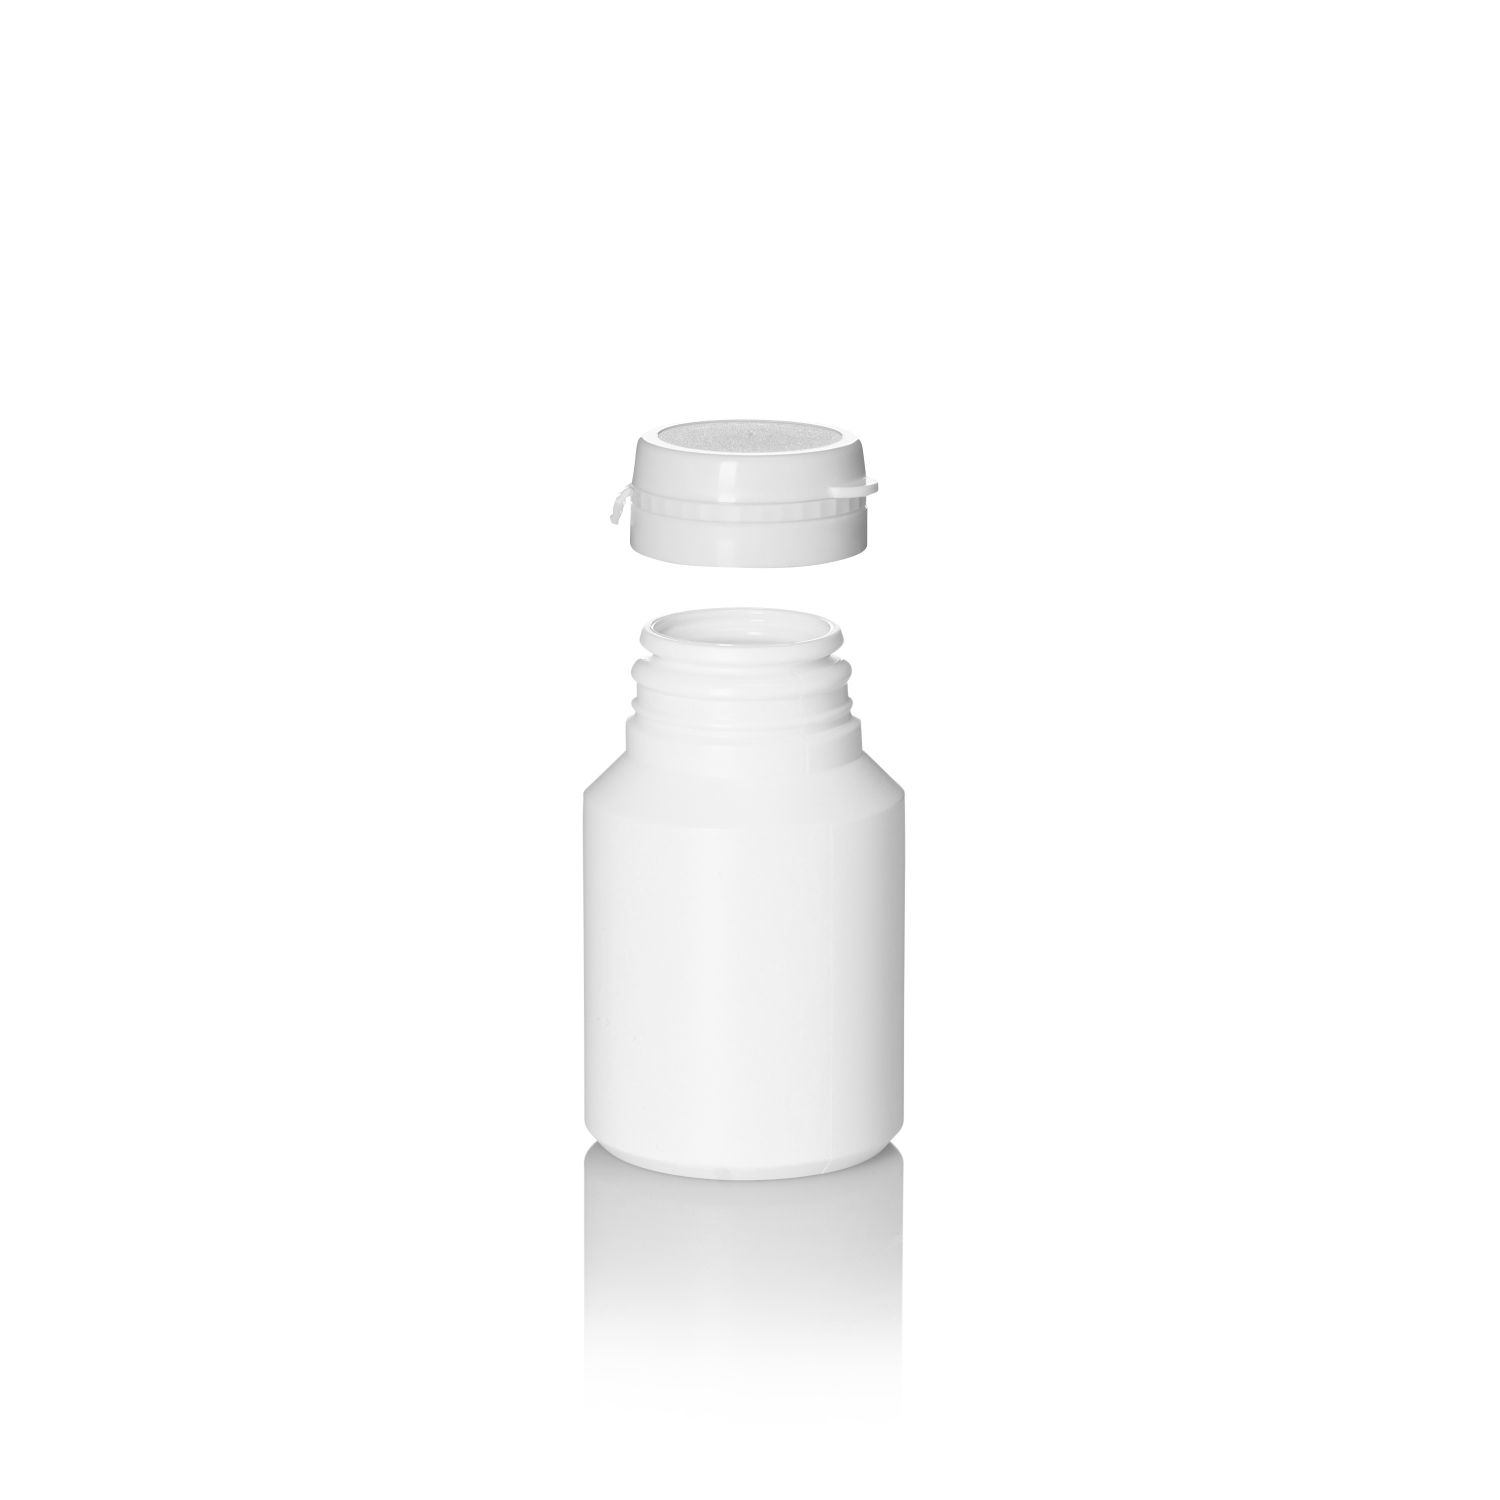 75ml White PP Tamper Evident Tampertainer Jar